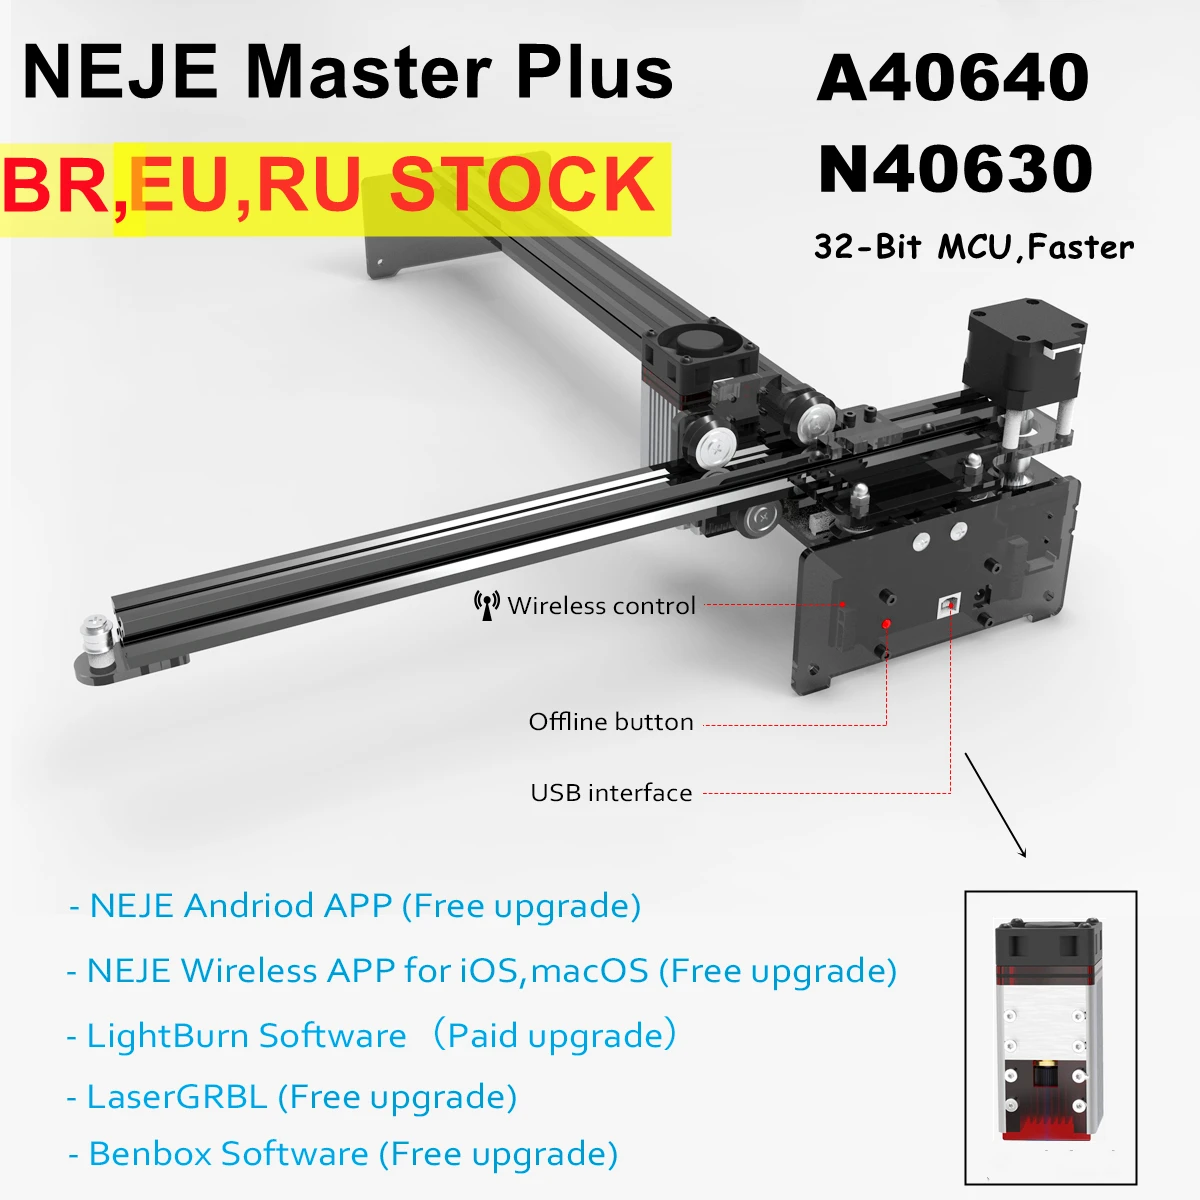 NEJE Master Plus A40640 80W CNC Laser Engraver Cutter Printer Cutting Machine Router Lightburn Bluetooth Wood Metal Mark Tools